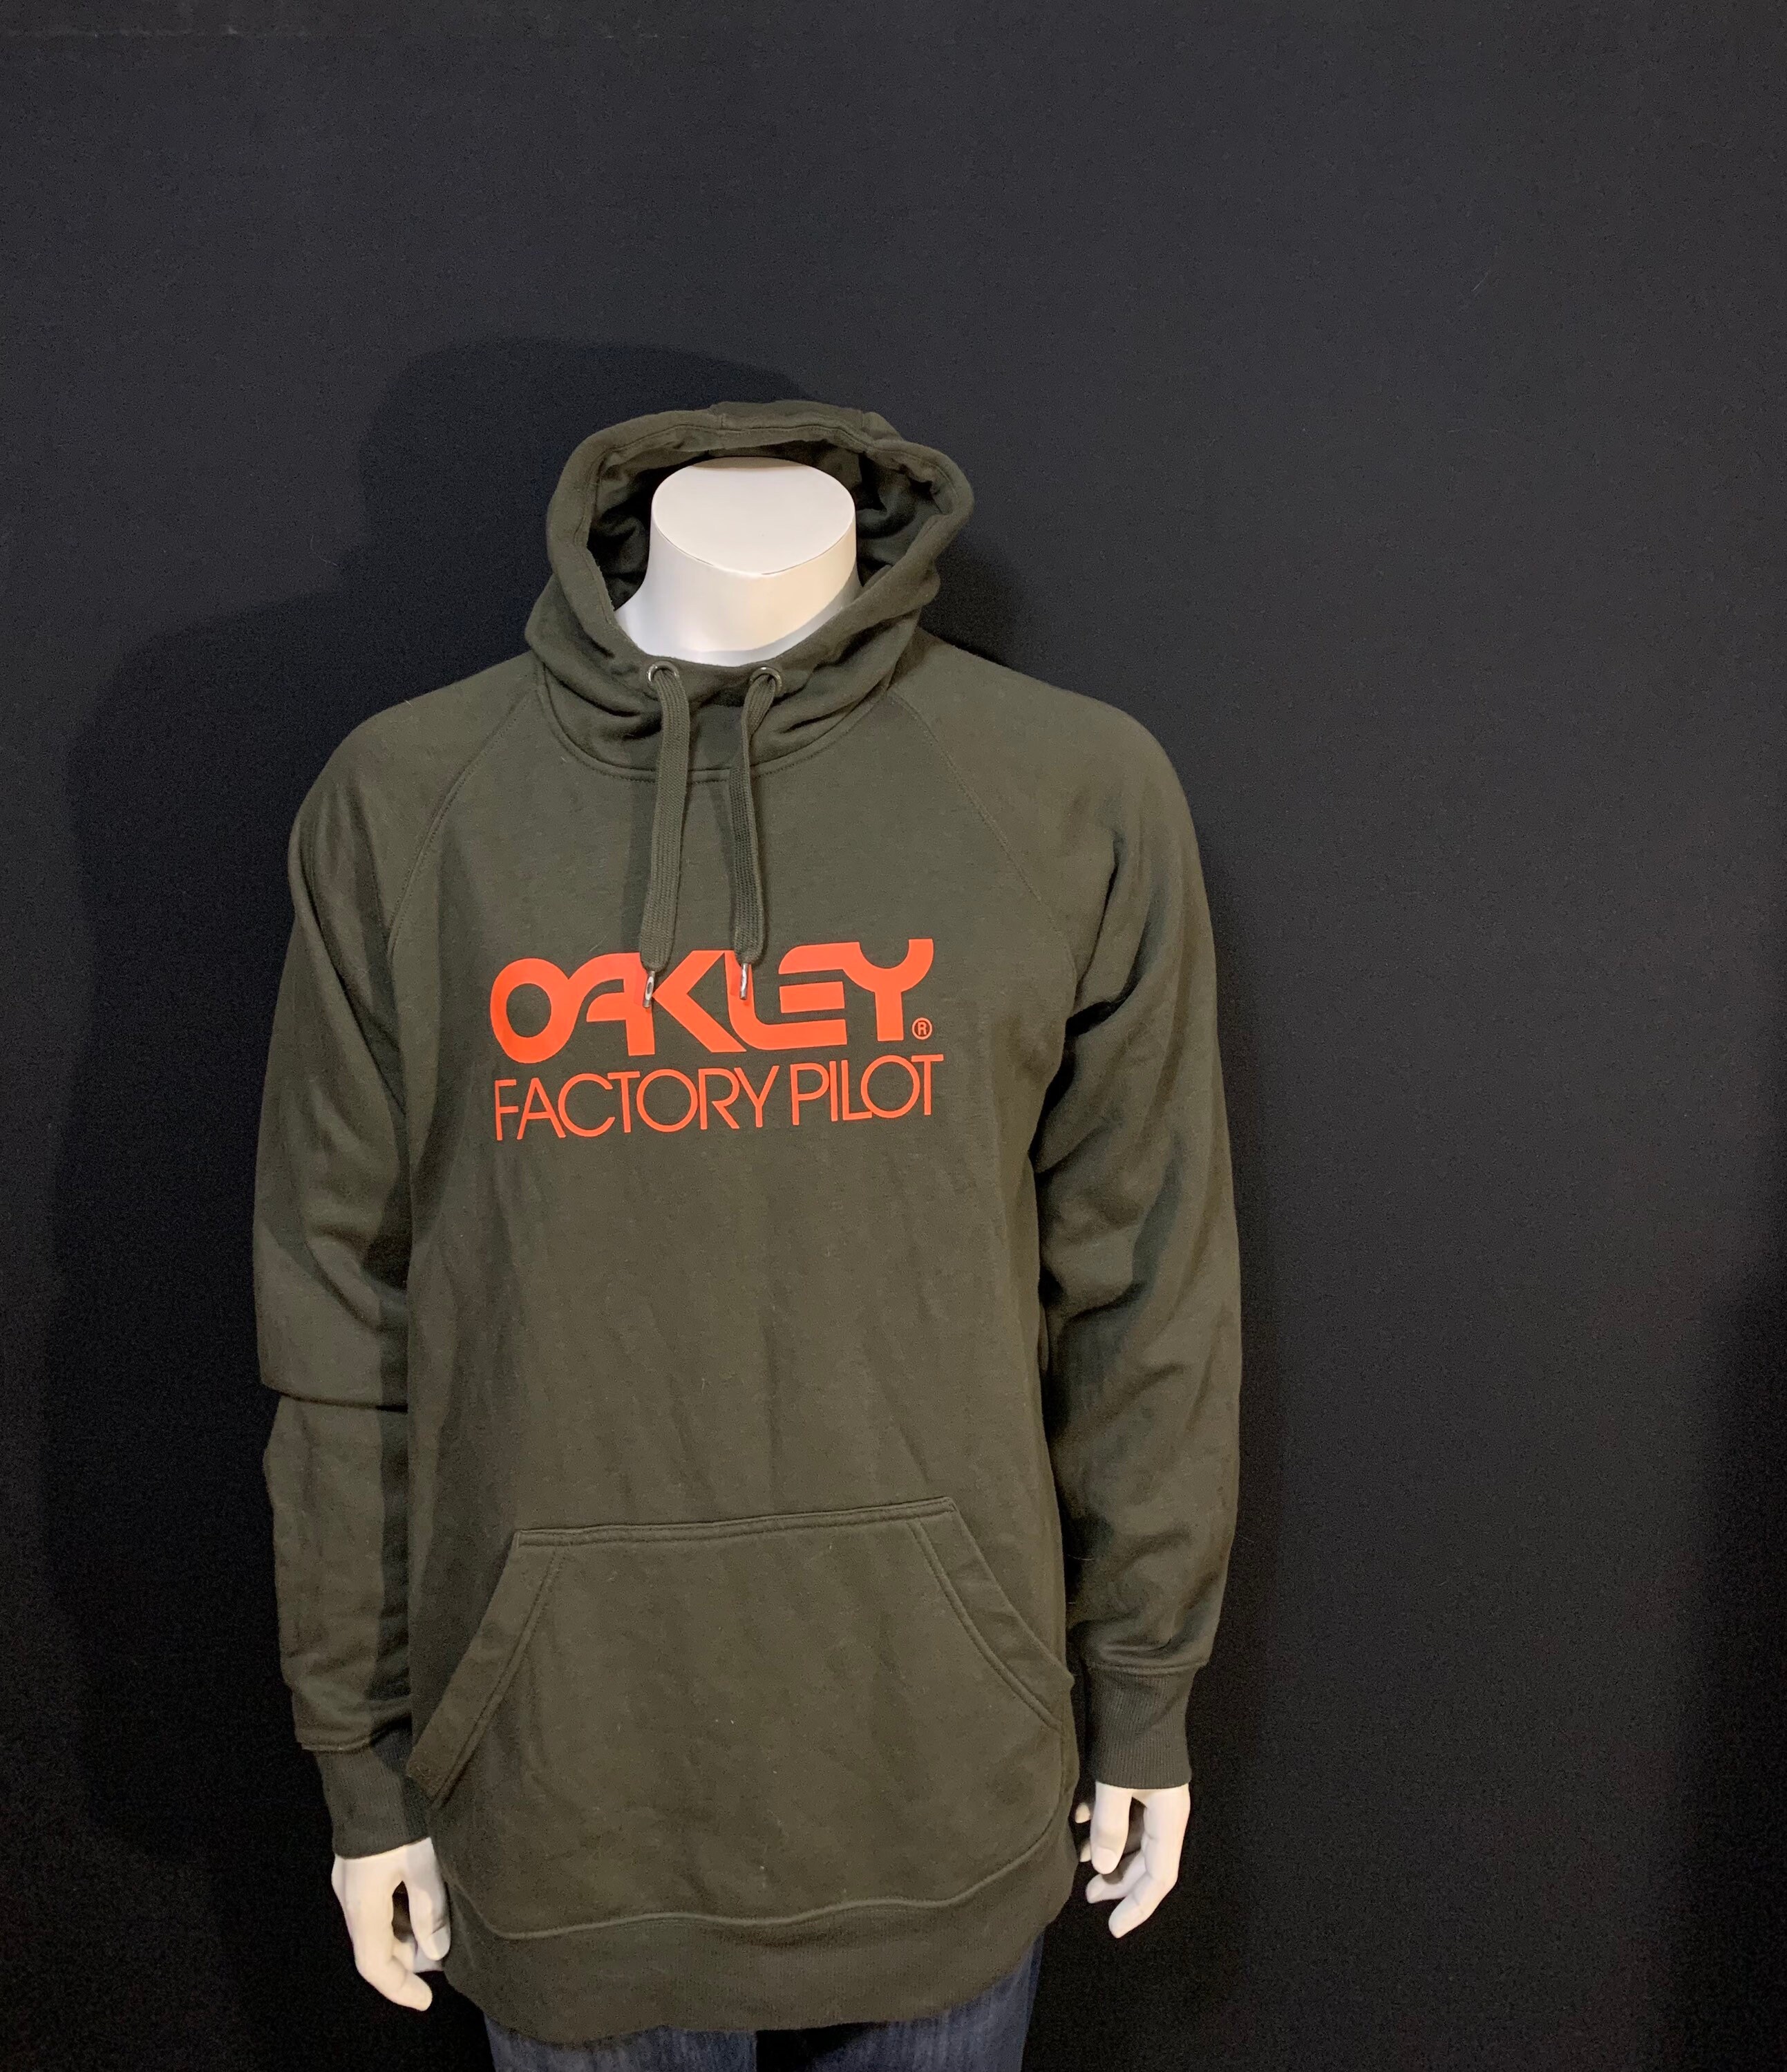 Oakley Factory Pilot - Etsy Australia